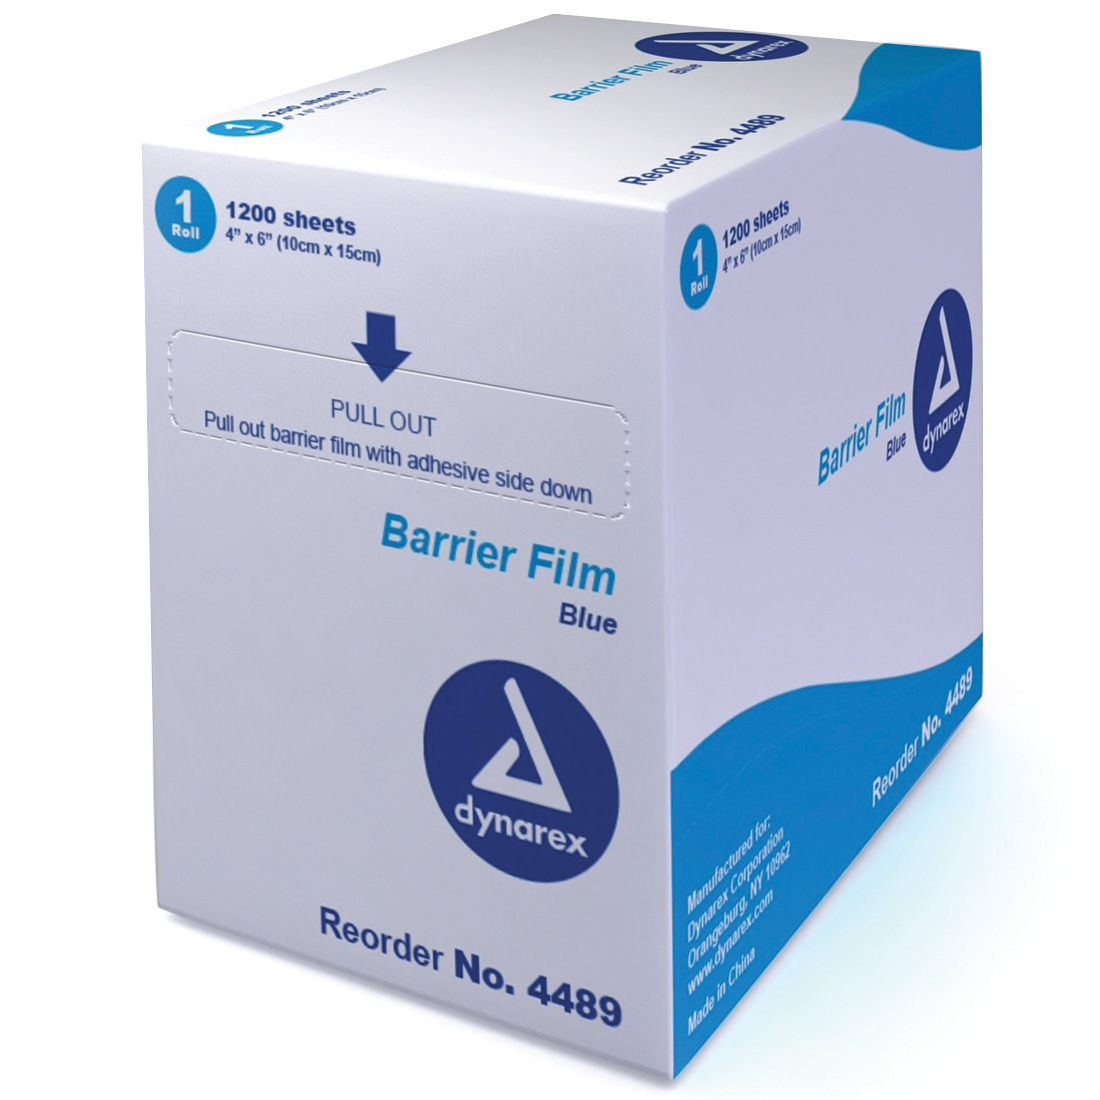 Dynarex Barrier Film in dispenser box, blue- 1200 sheets/Roll